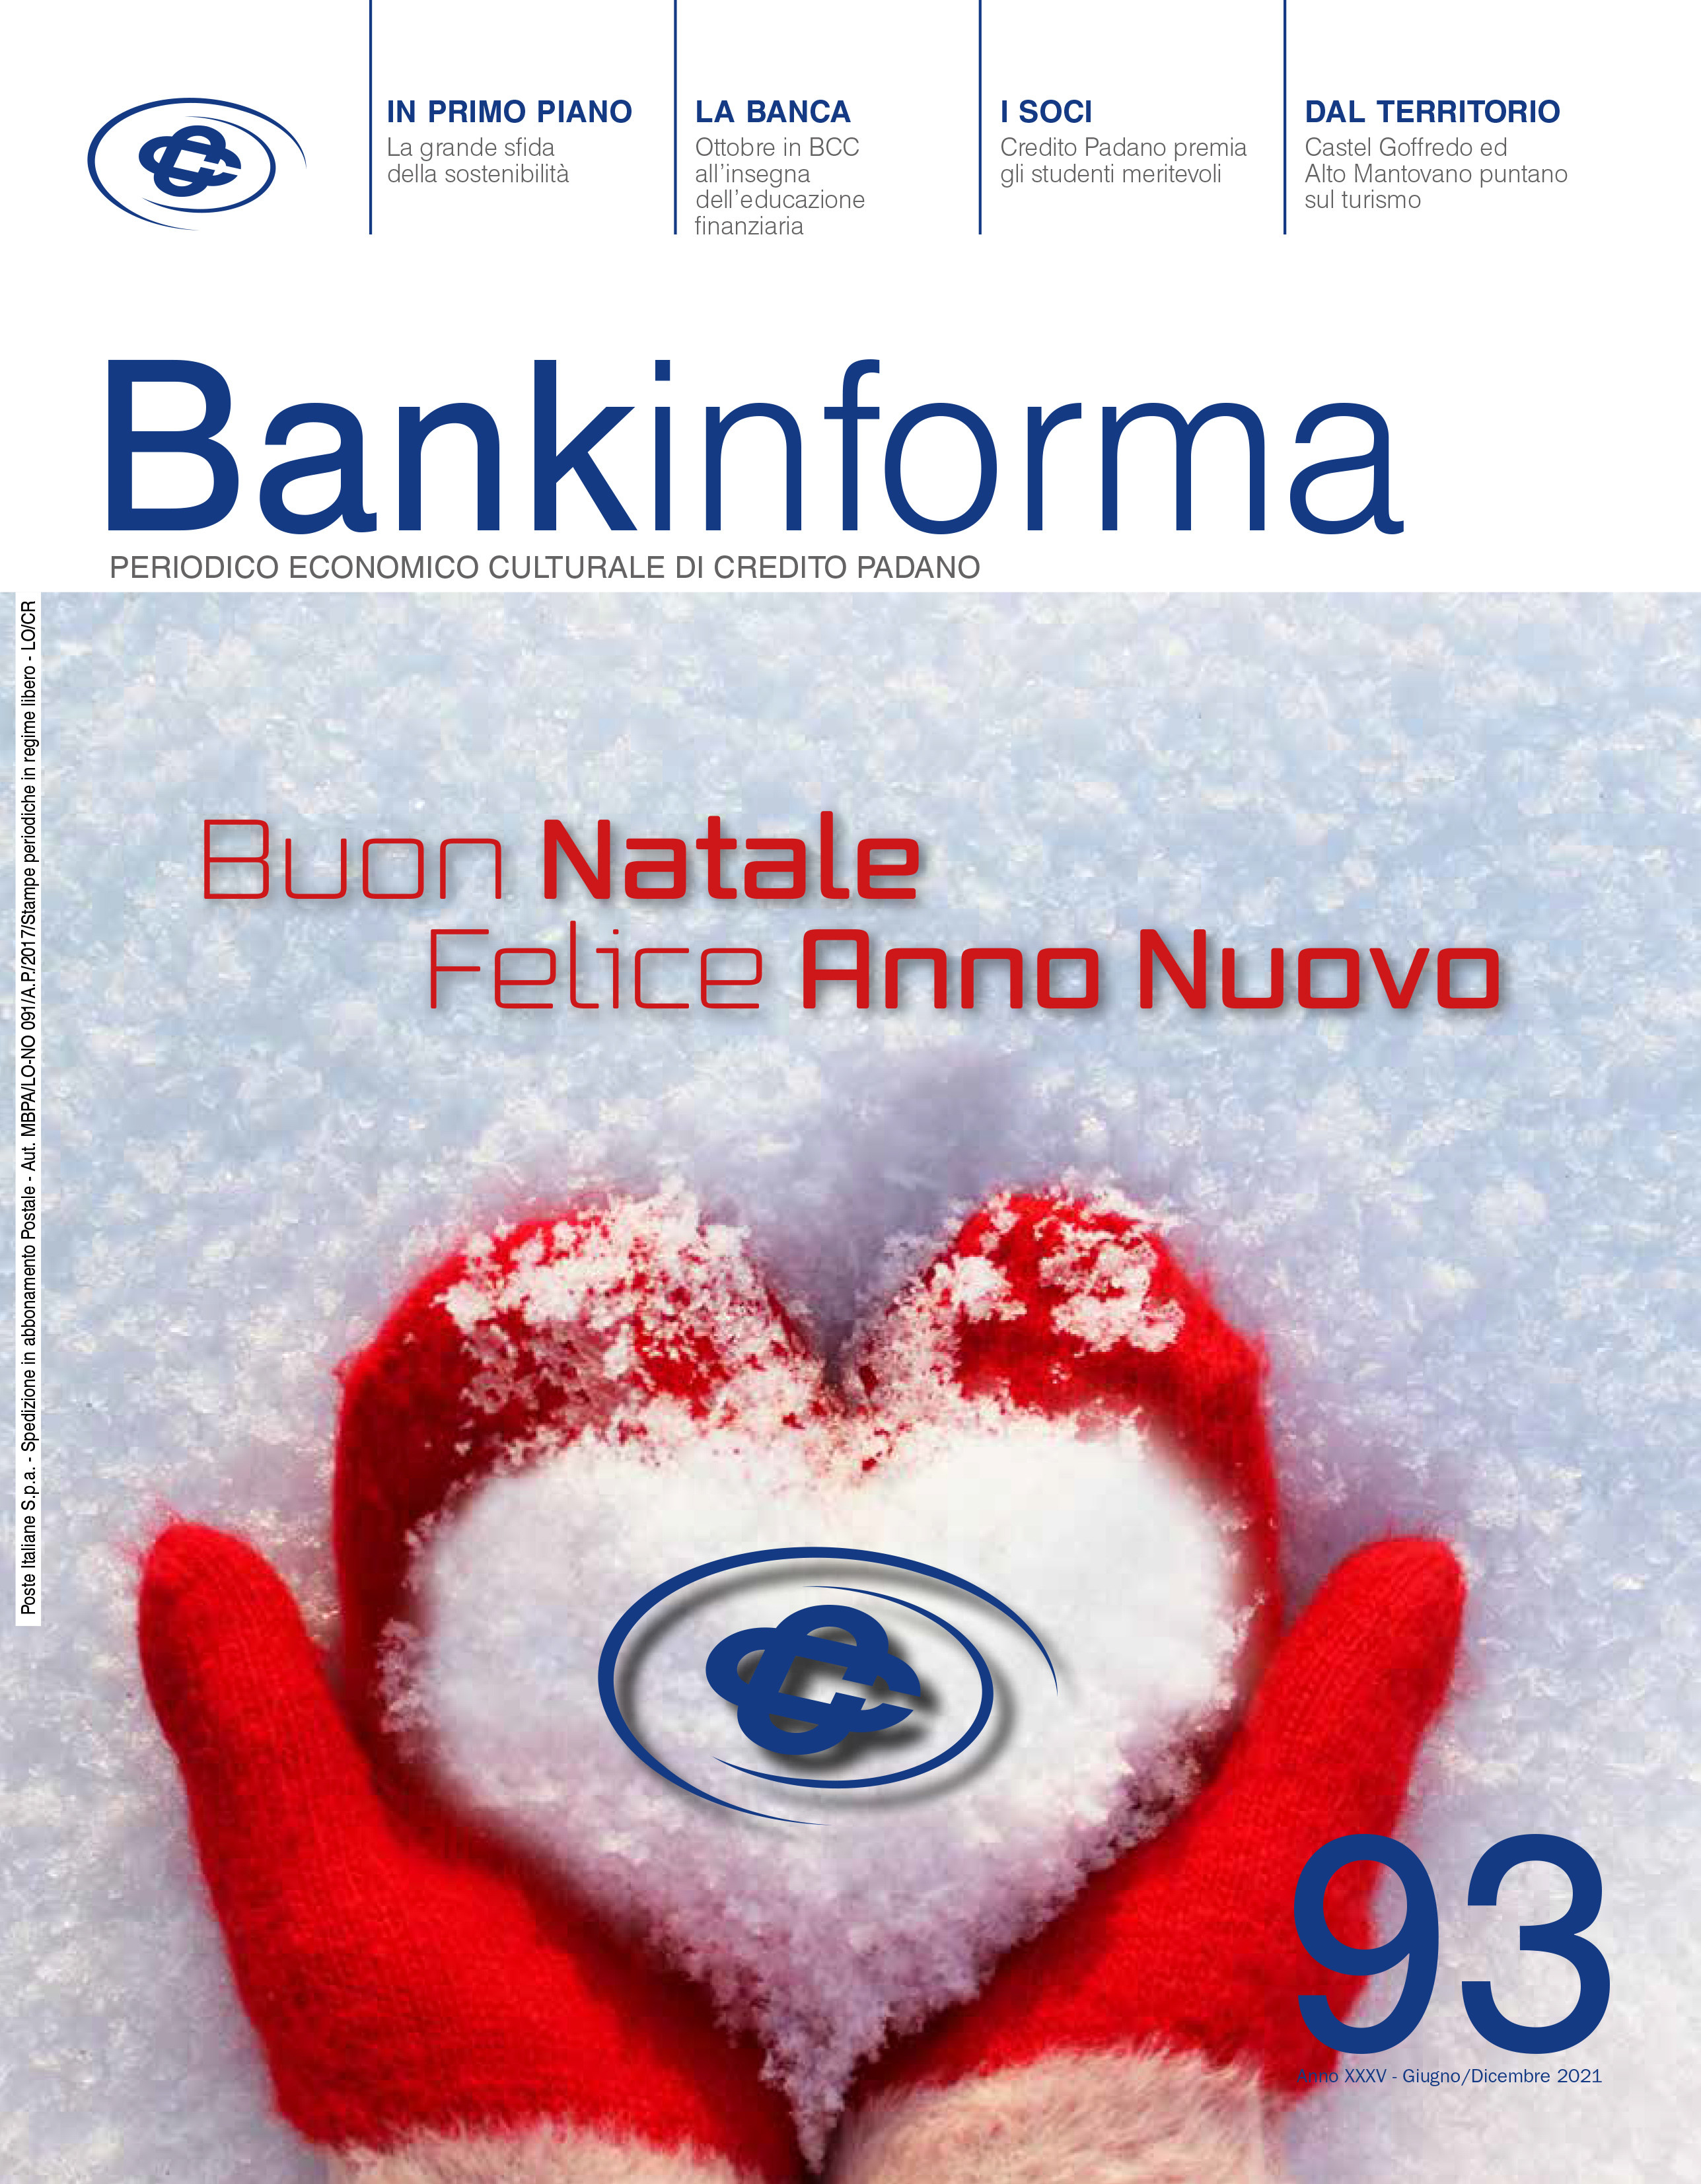 Bankinforma nr. 93 - copertina